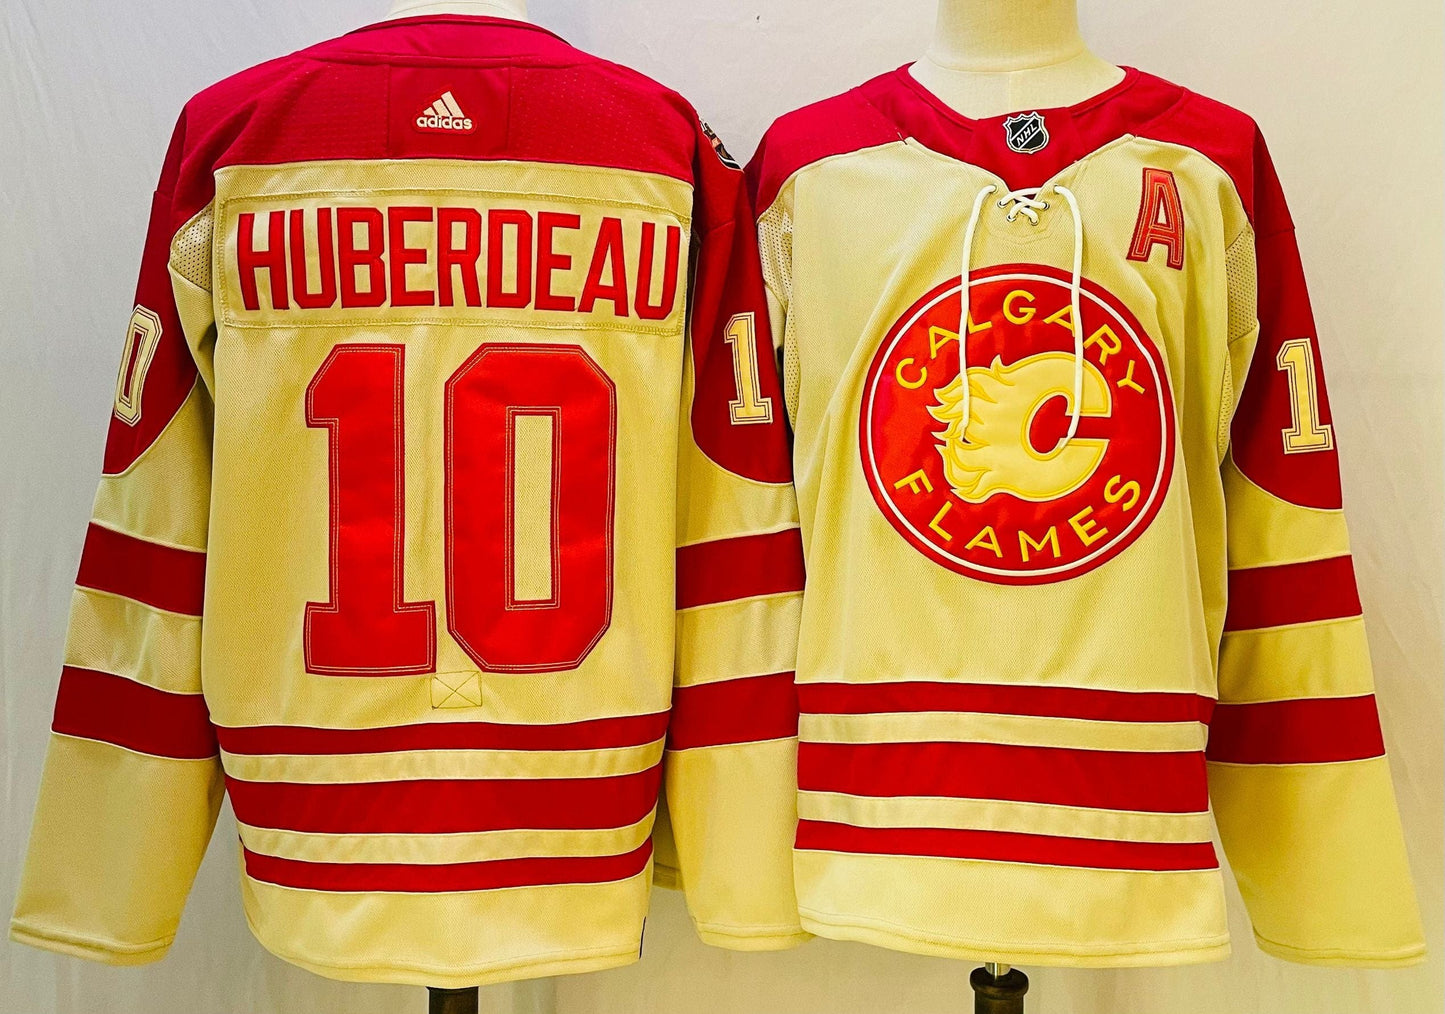 NHL Calgary Flames HUBERDEAU # 10 Jersey